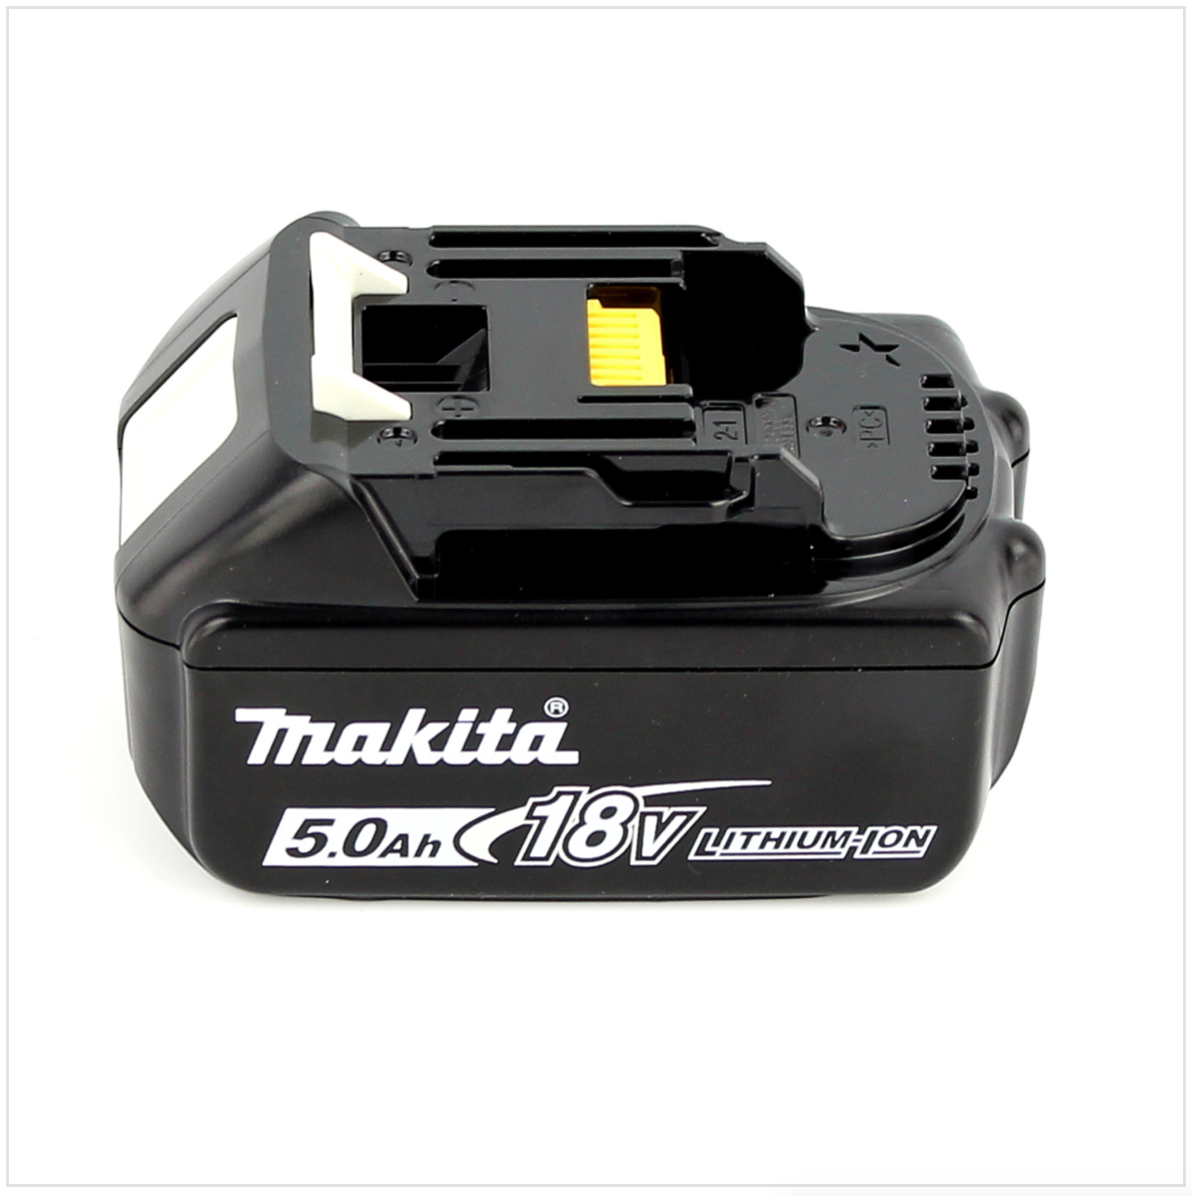 Makita DEADML / DML 805 LED Baustrahler 14,4 - 18 Volt / 230 Volt + 1x BL 1850 B 18V - 5 Ah Li-Ion Akku - Toolbrothers